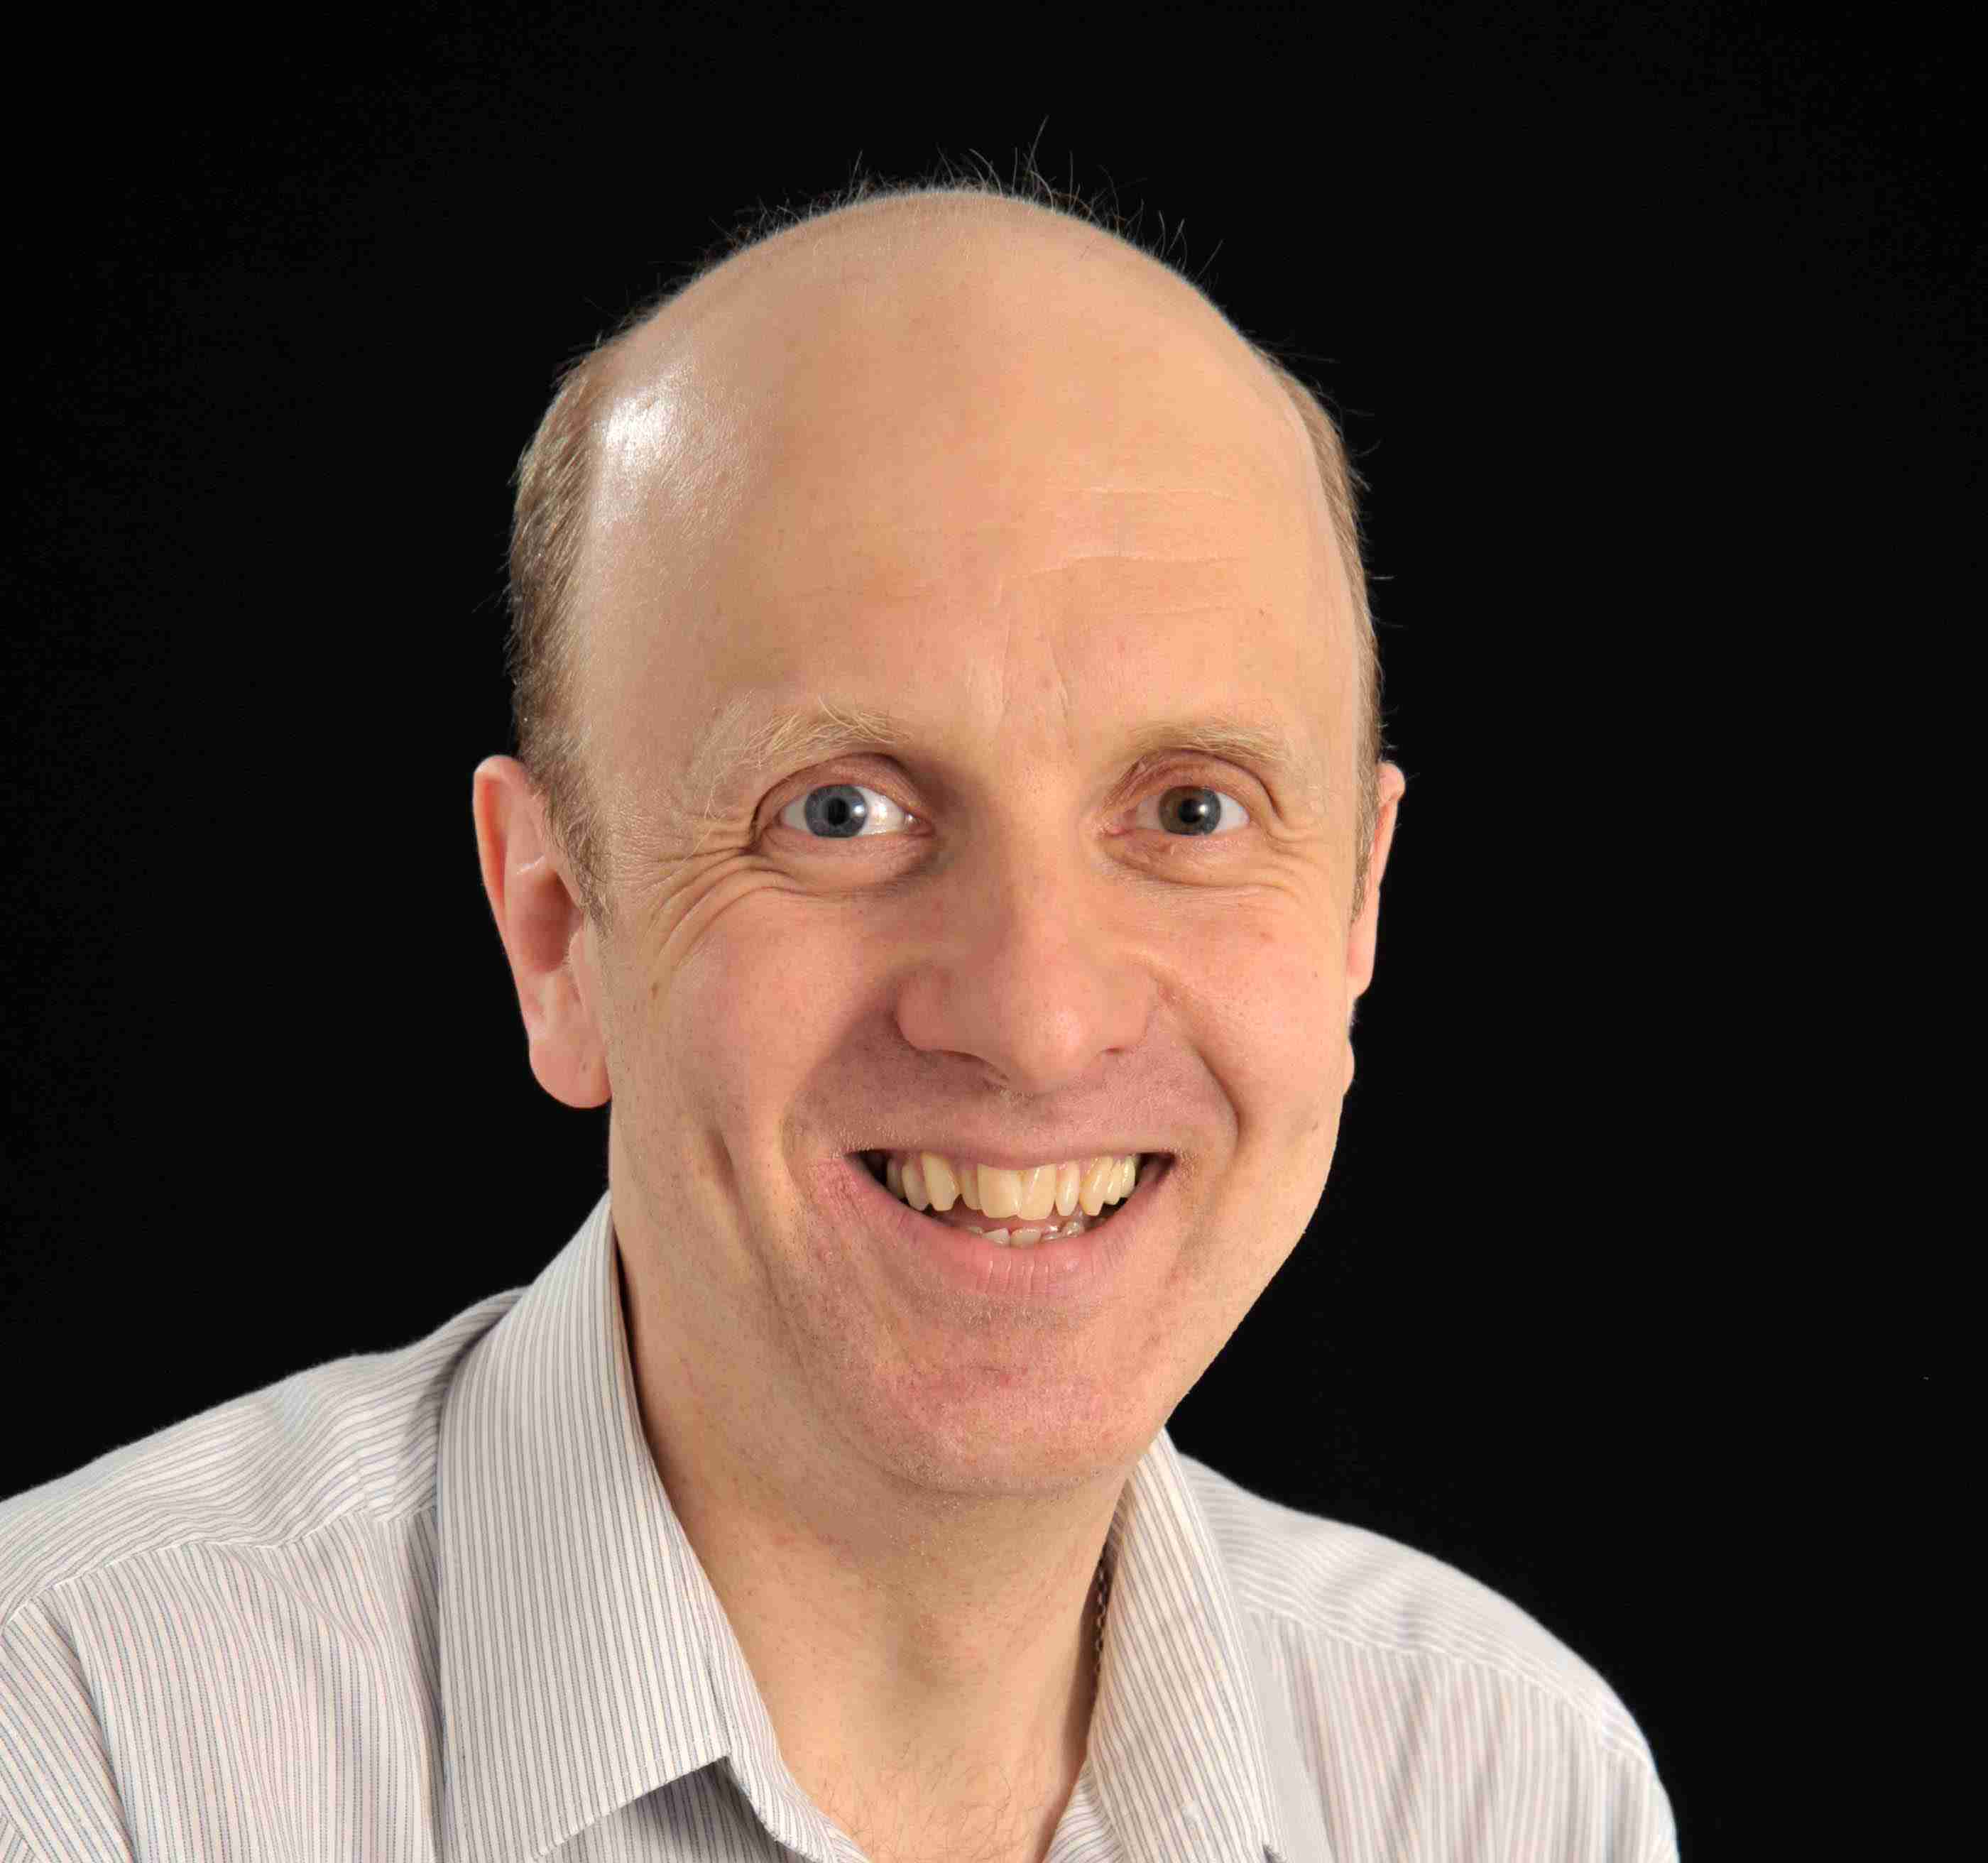 Profile image of Professor John Greenman